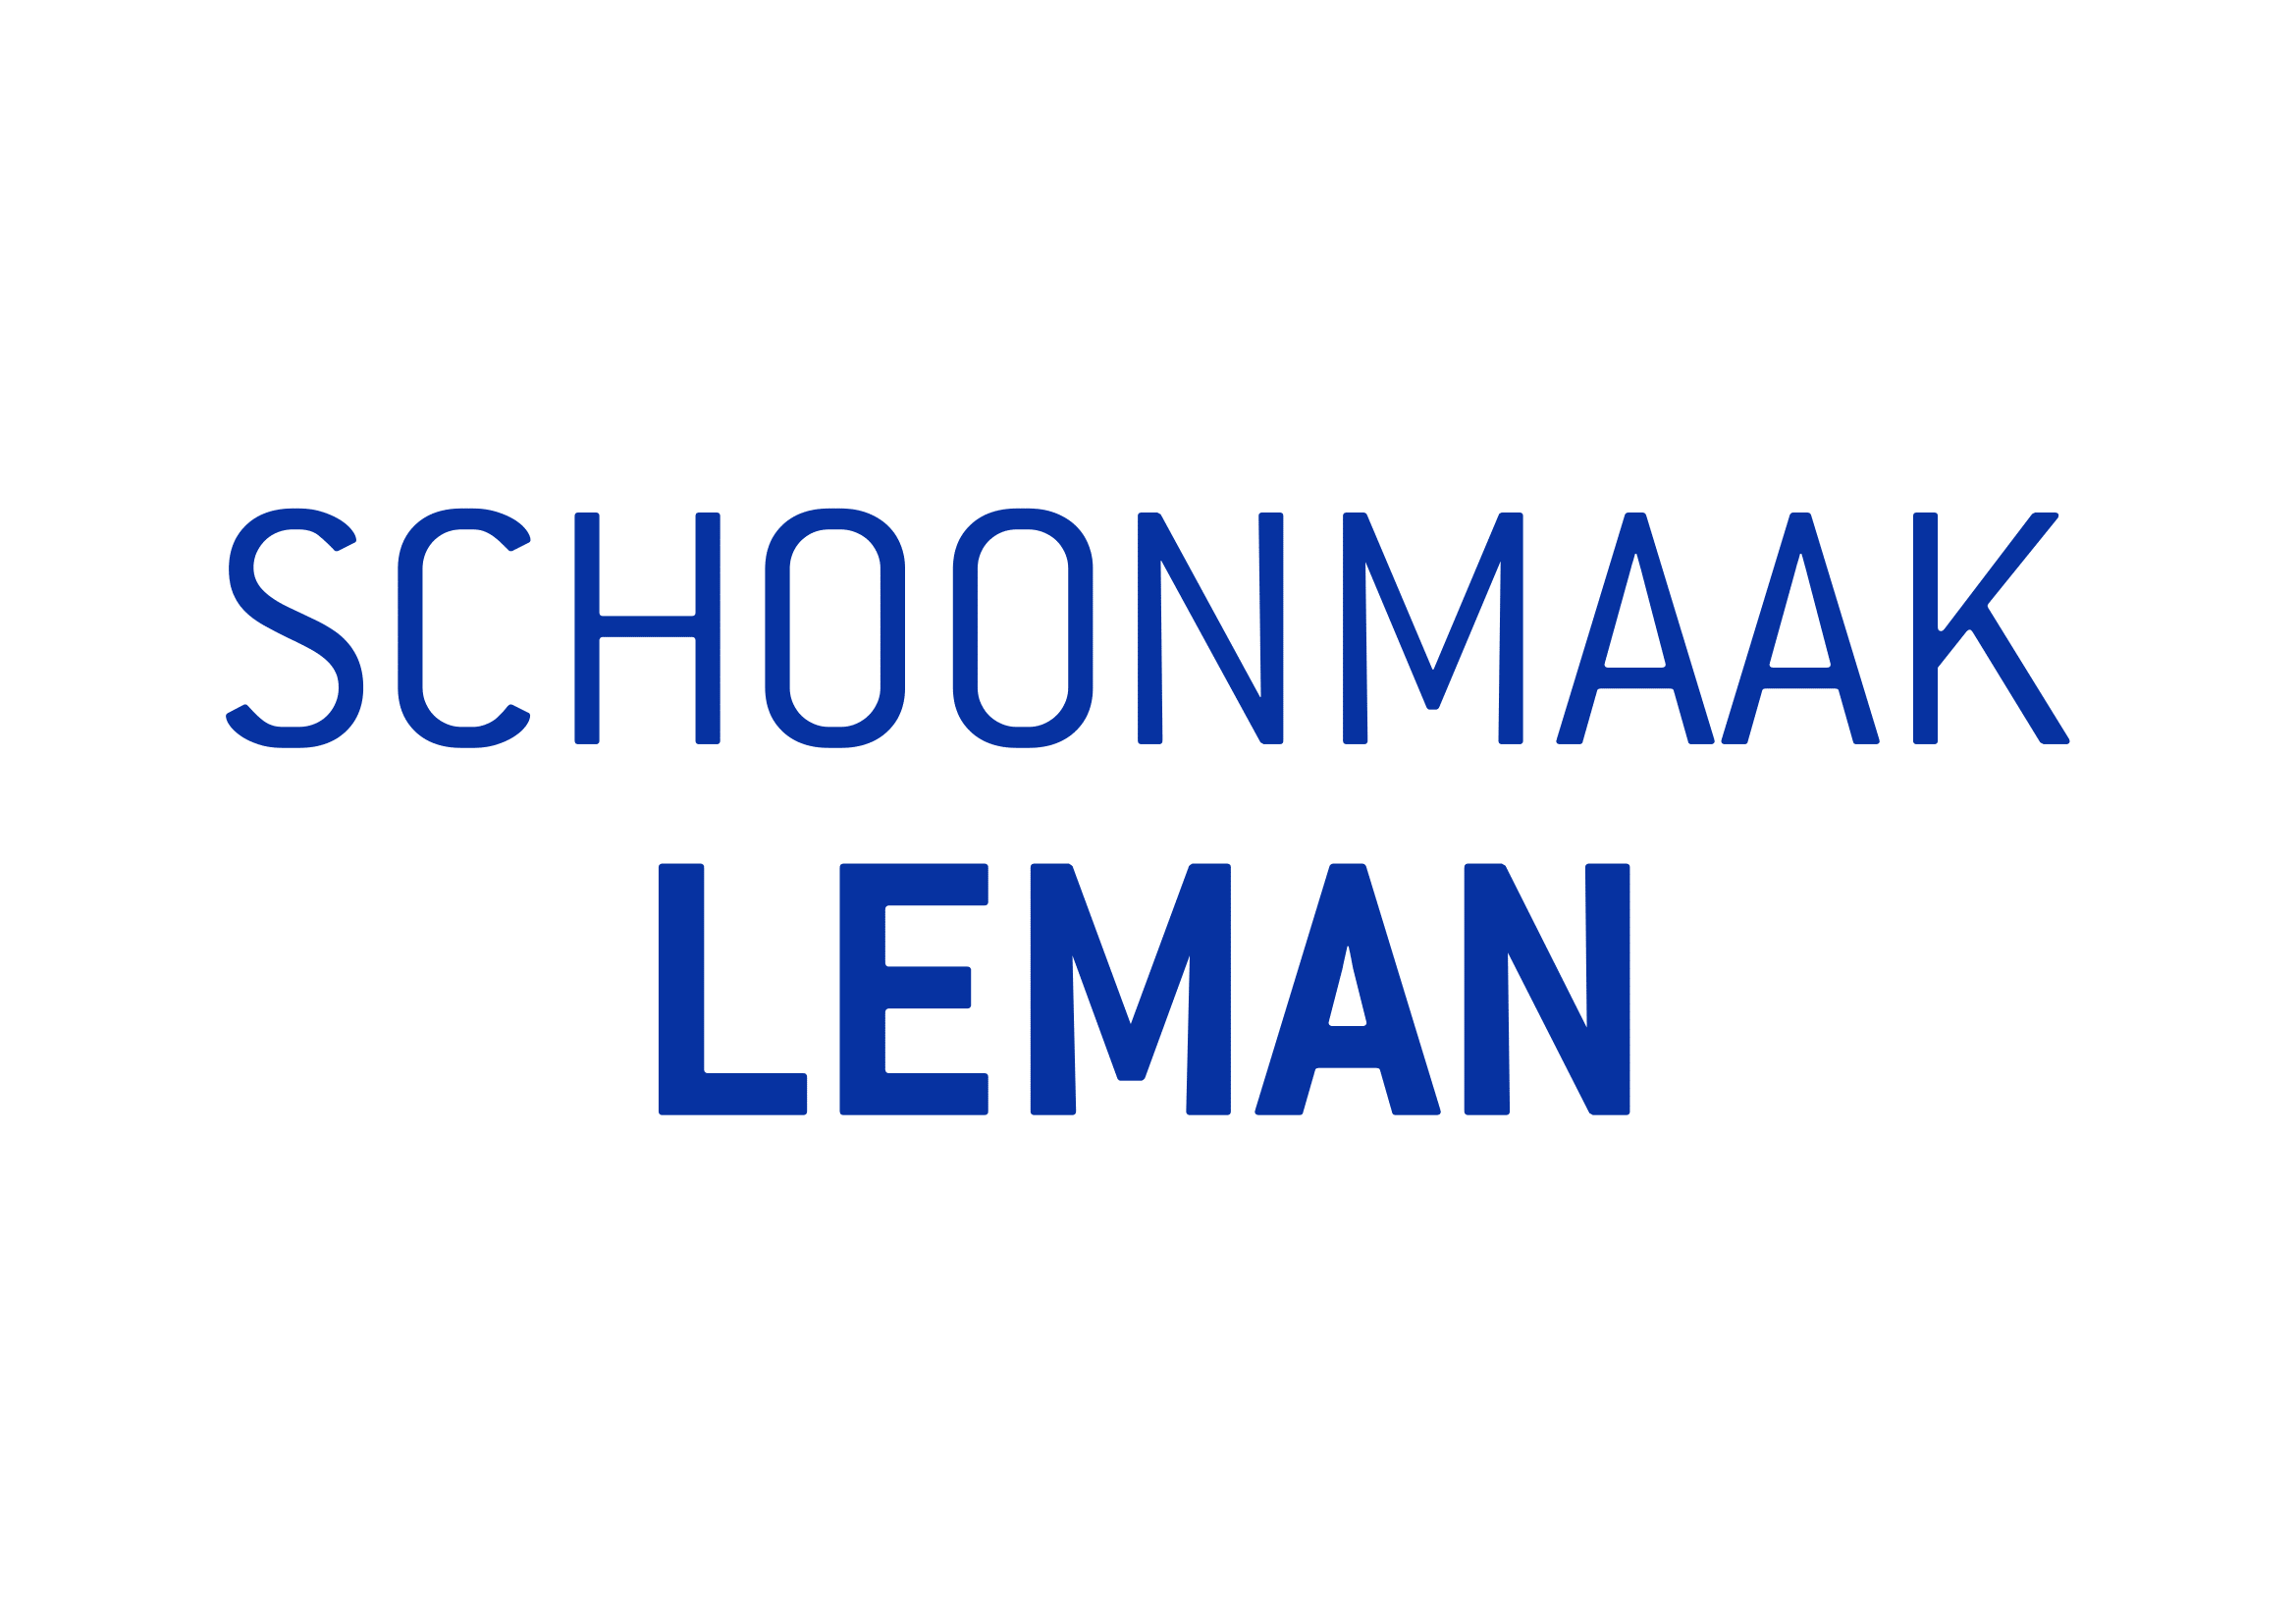 Schoonmaak Leman - Sponsor KSK Beveren-Leie